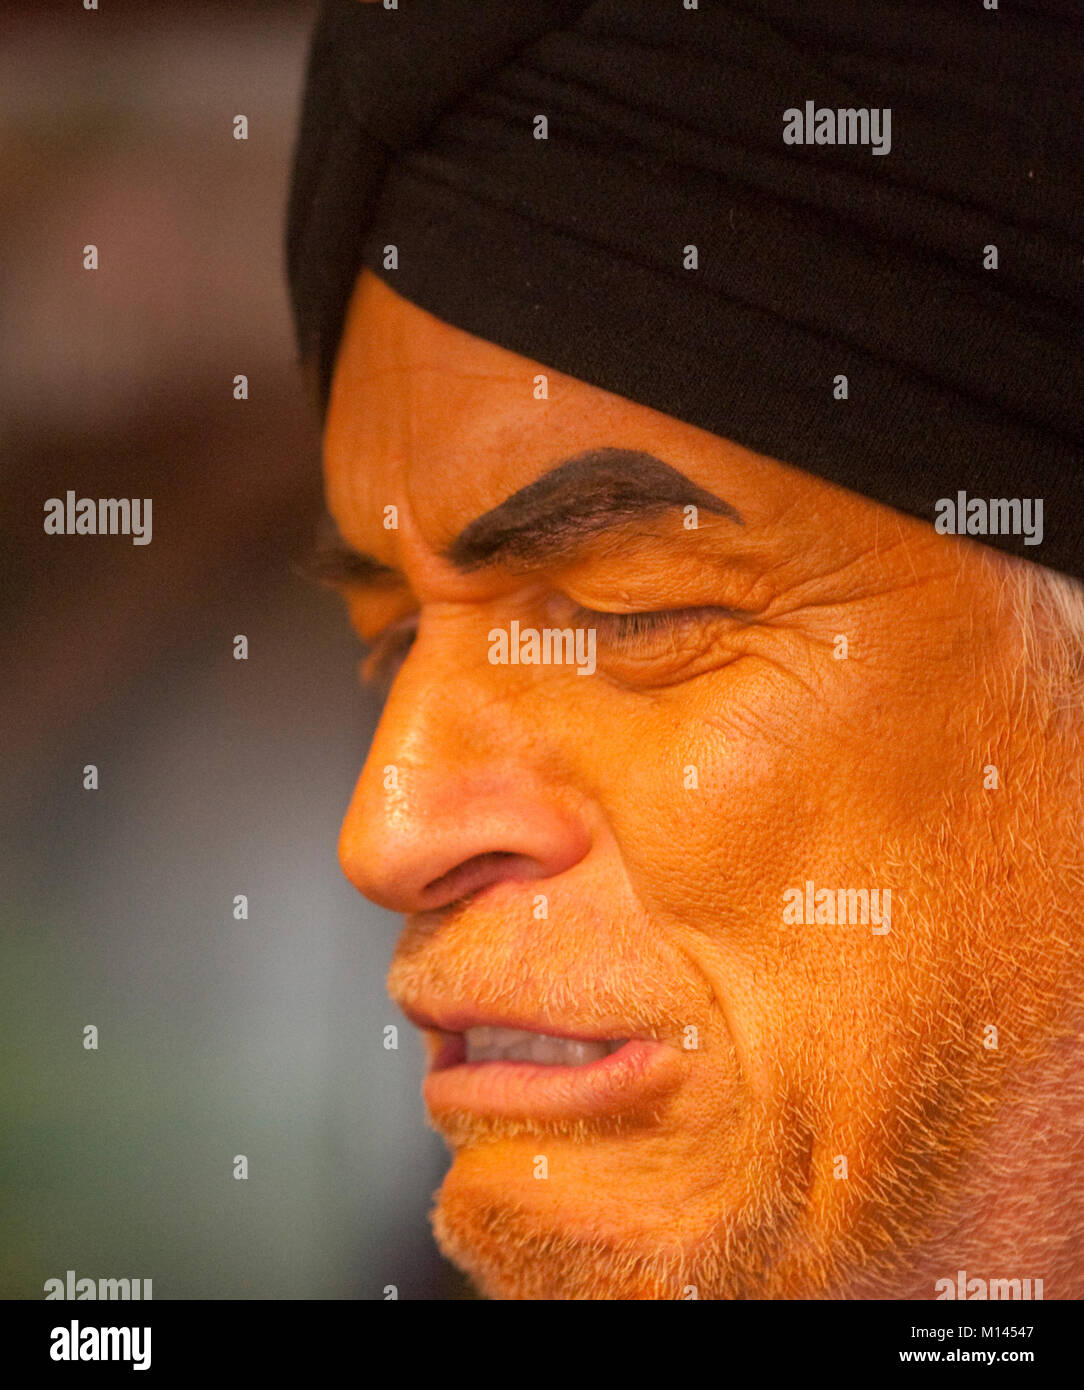 Orange faced man in a purple vest and black turban. Stock Photo